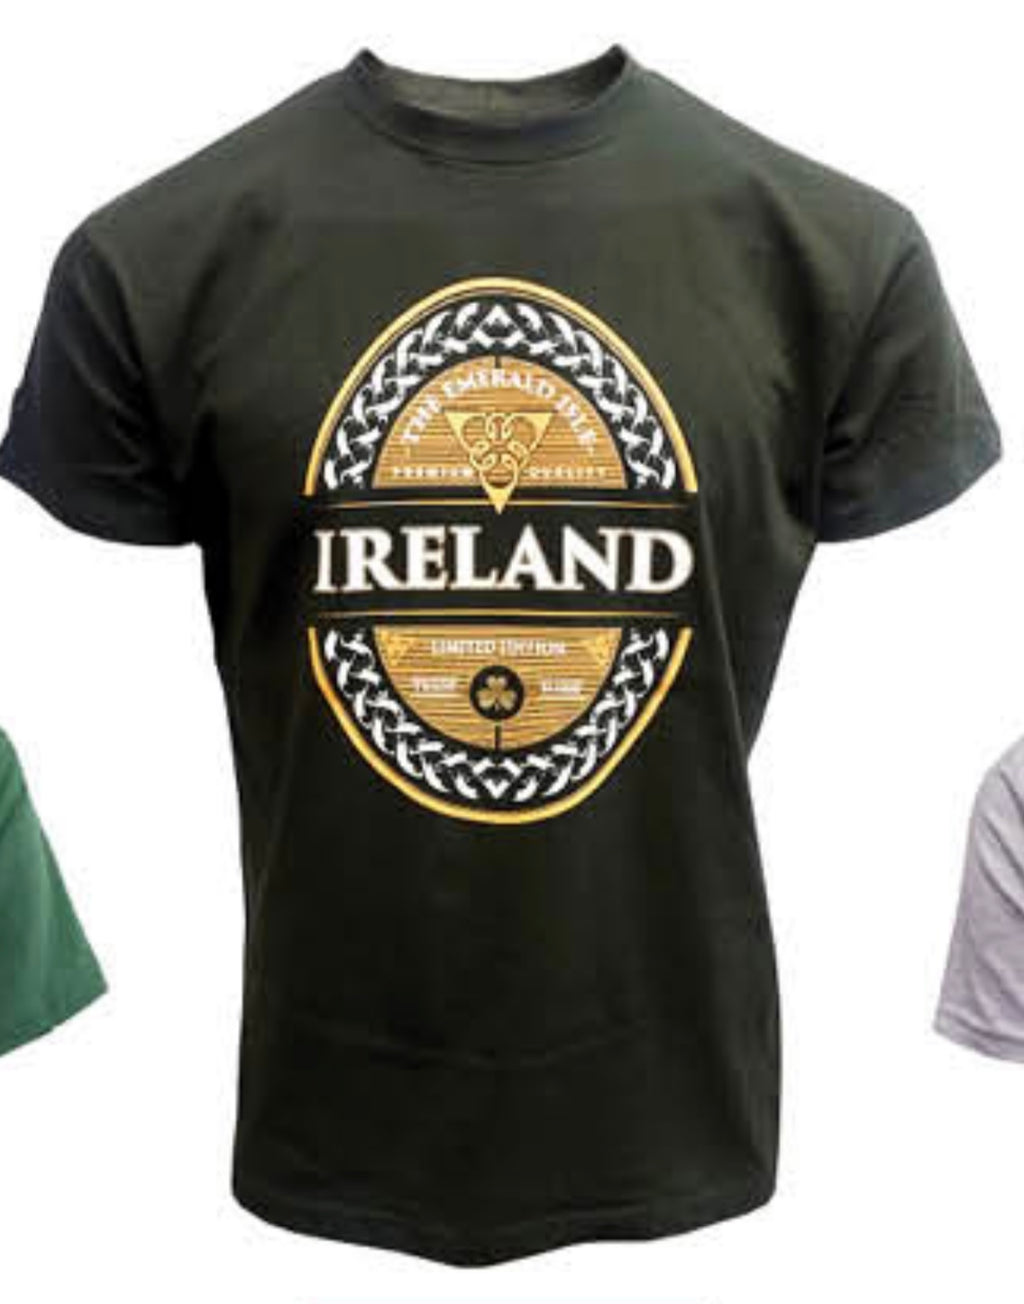 Ireland Emerald Label T-Shirt T1351